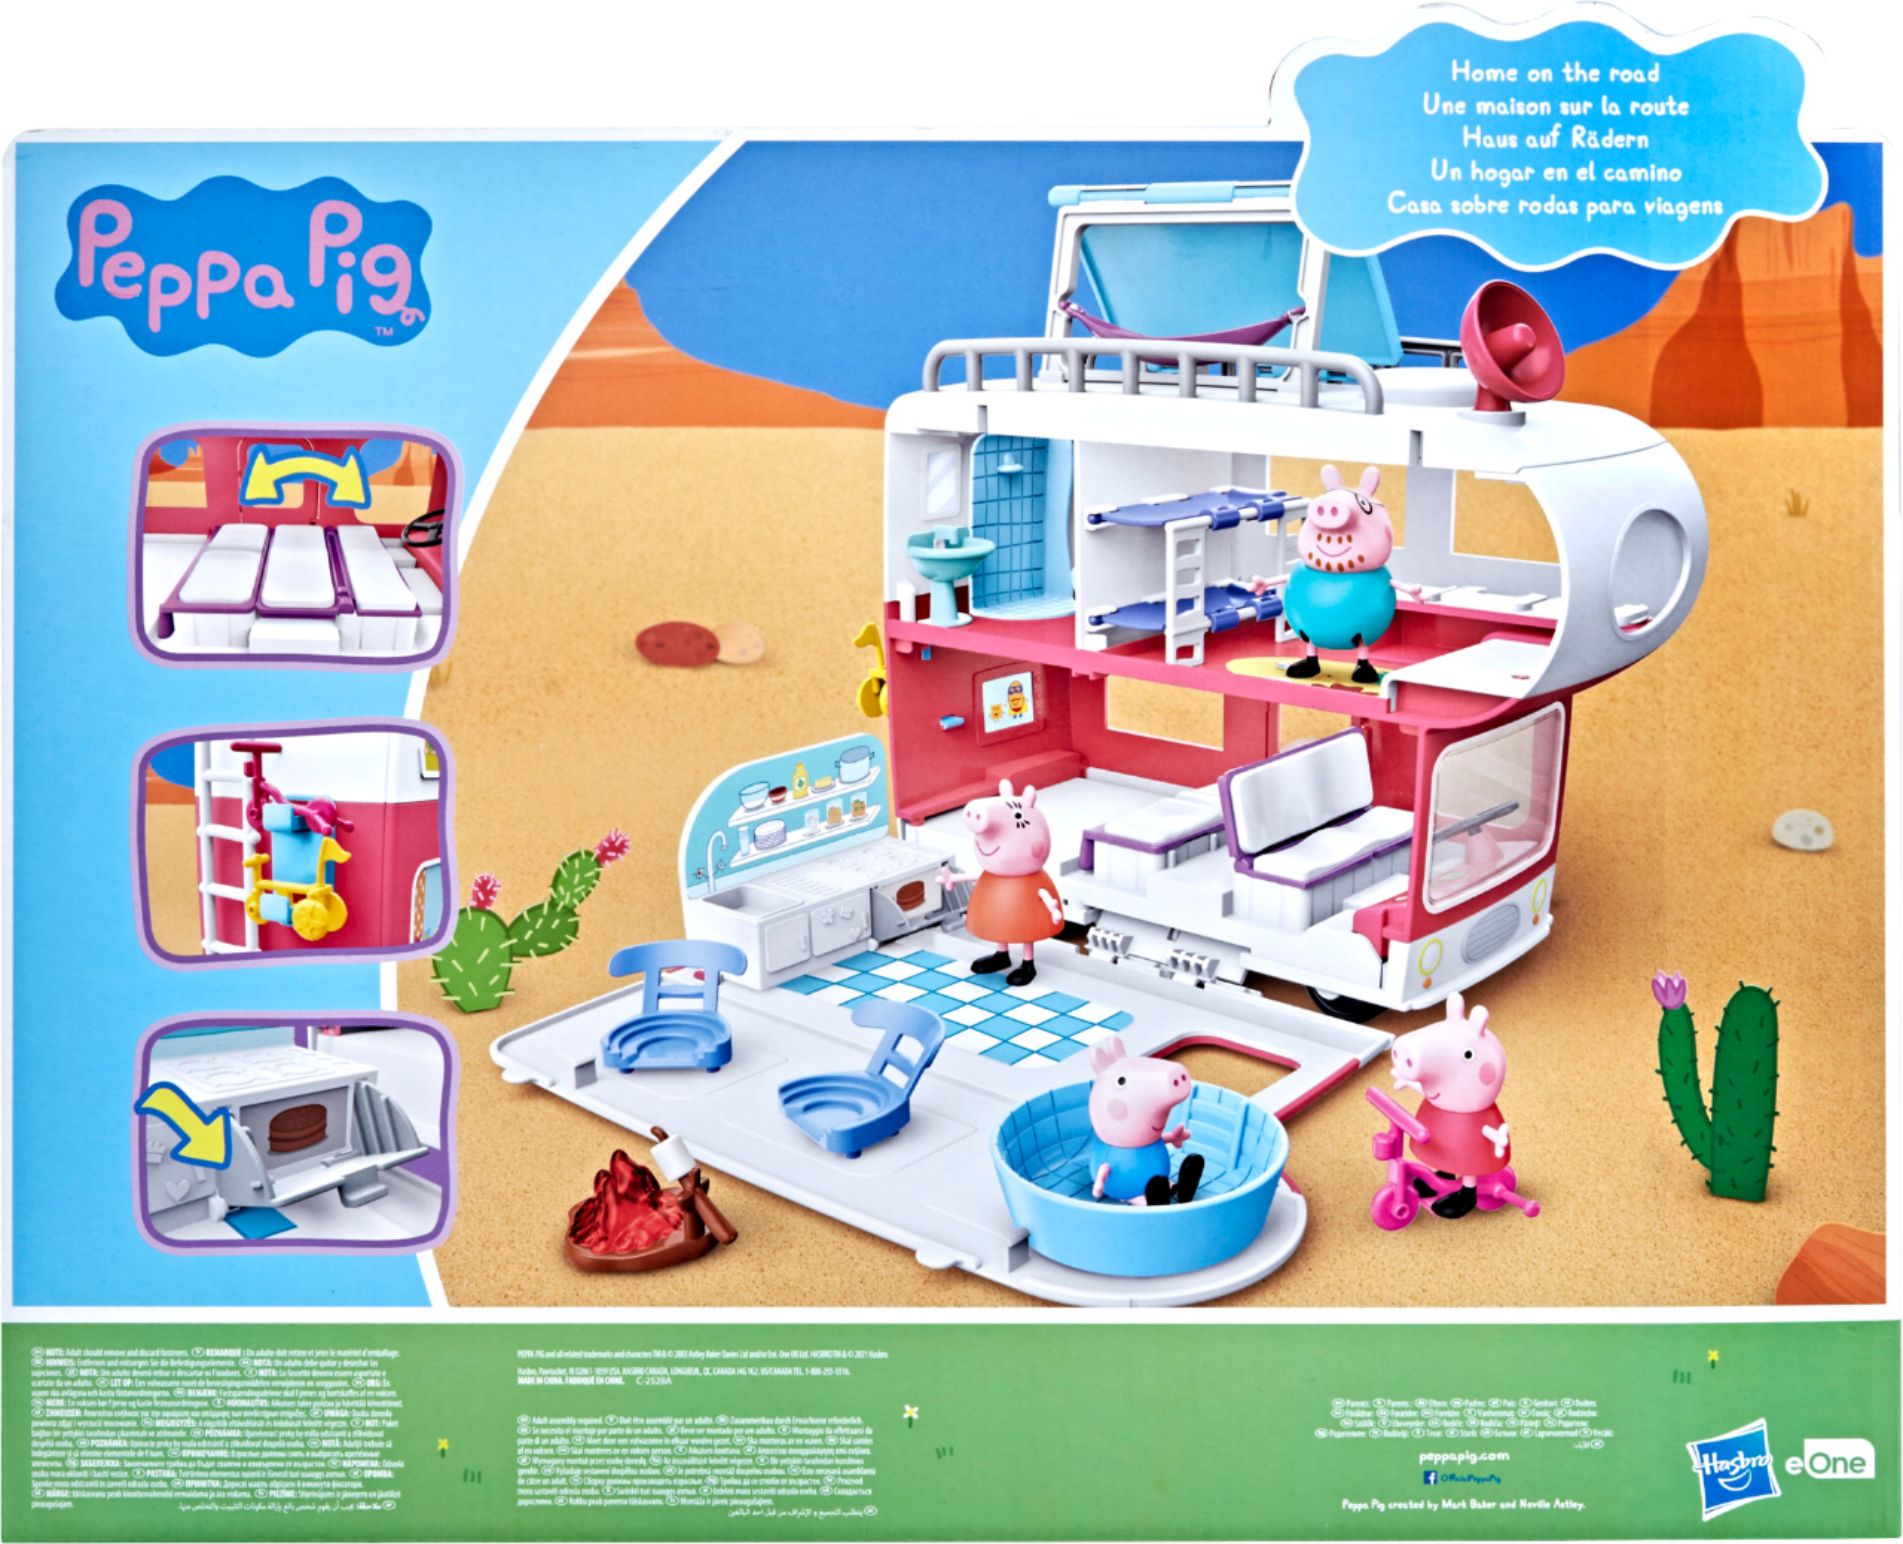 Peppa Pig Peppa's Adventures Peppa's Family House - BRAND NEW!